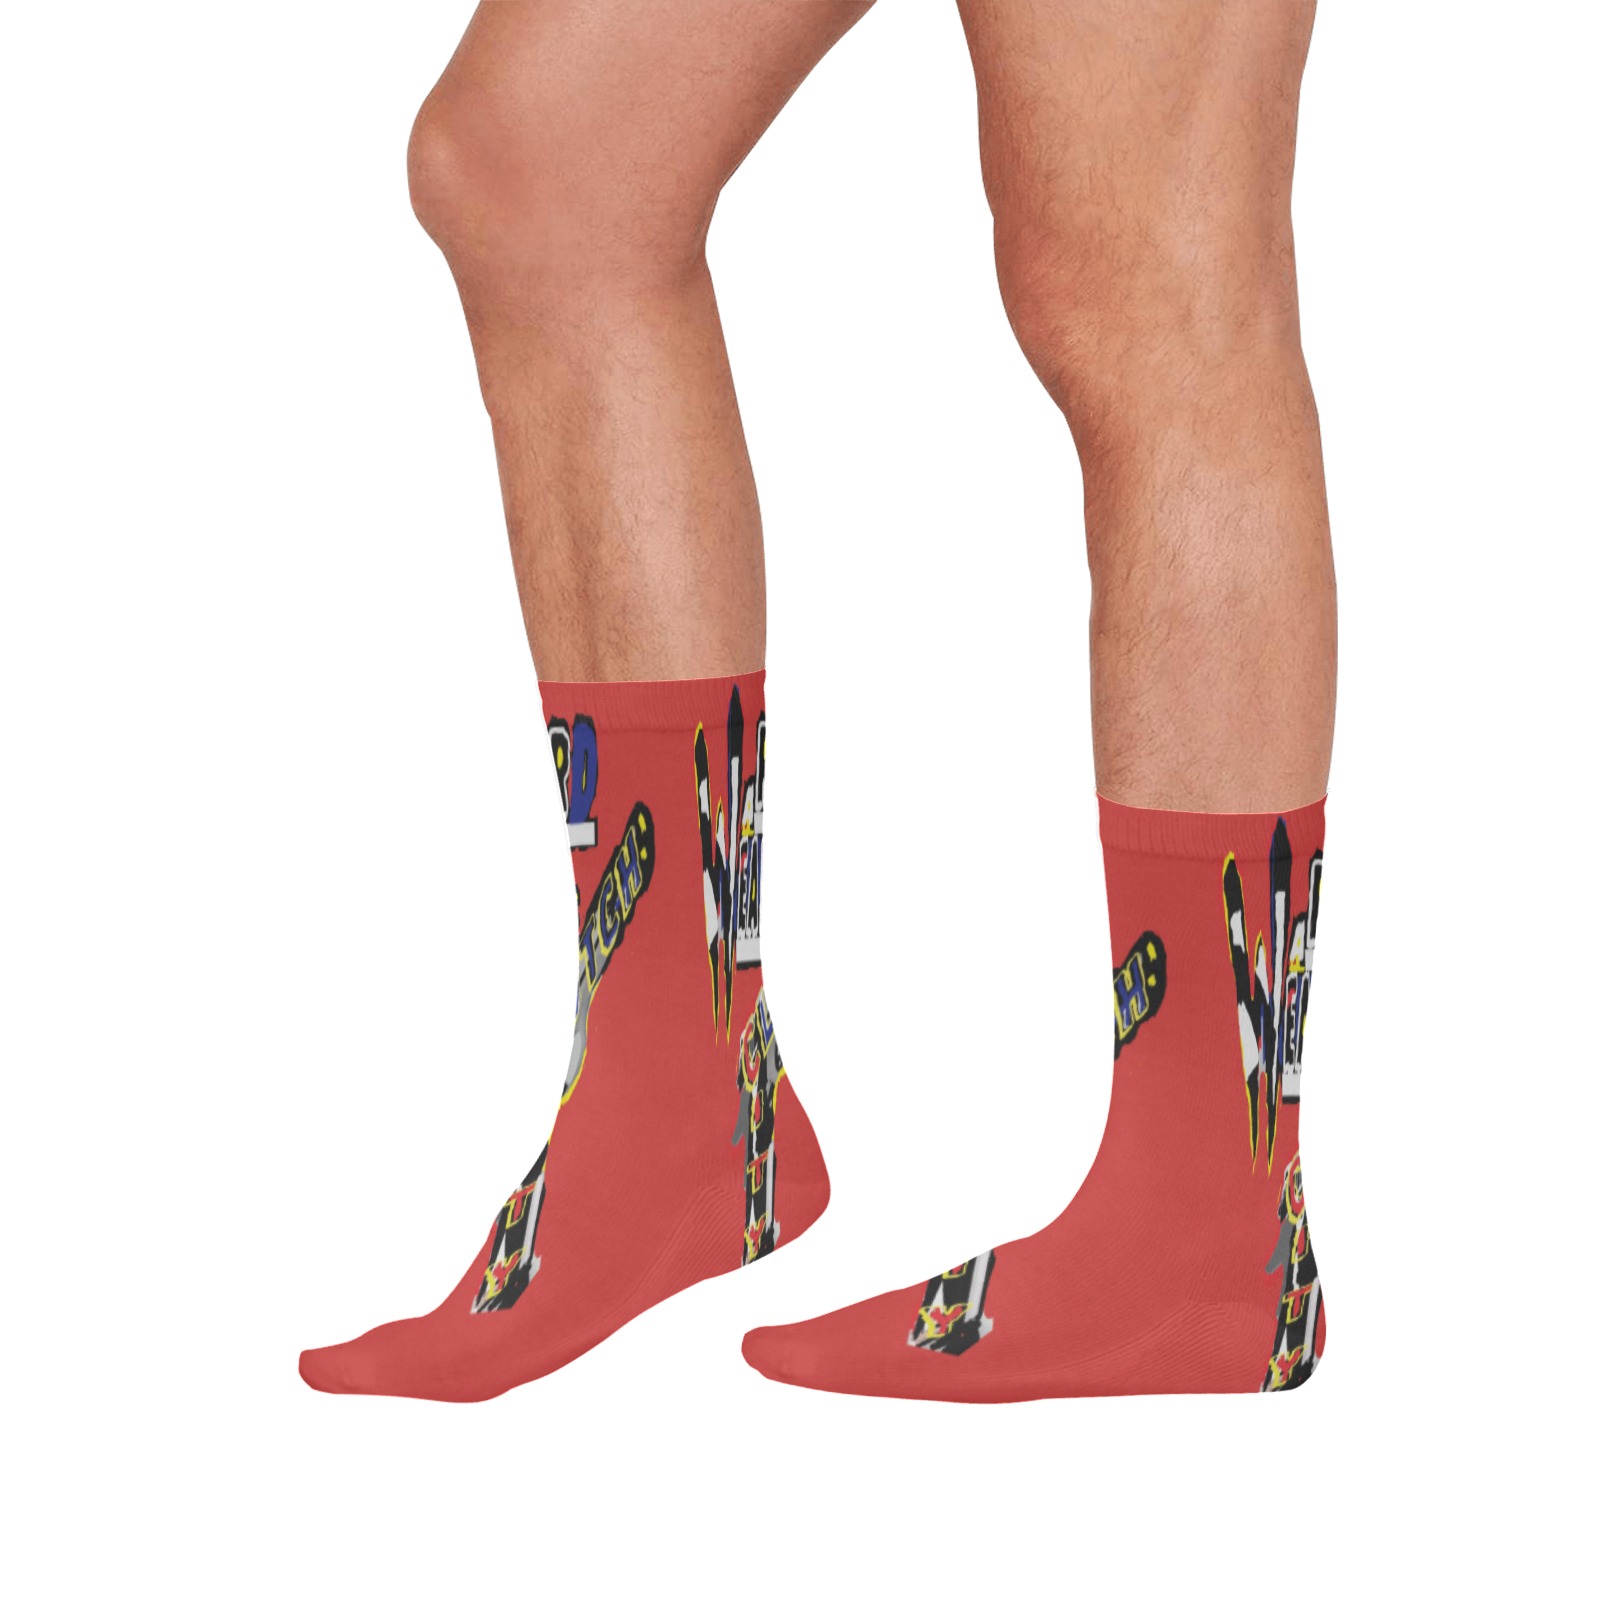 WD.WR.LOGO.RED All Over Print Socks for Men